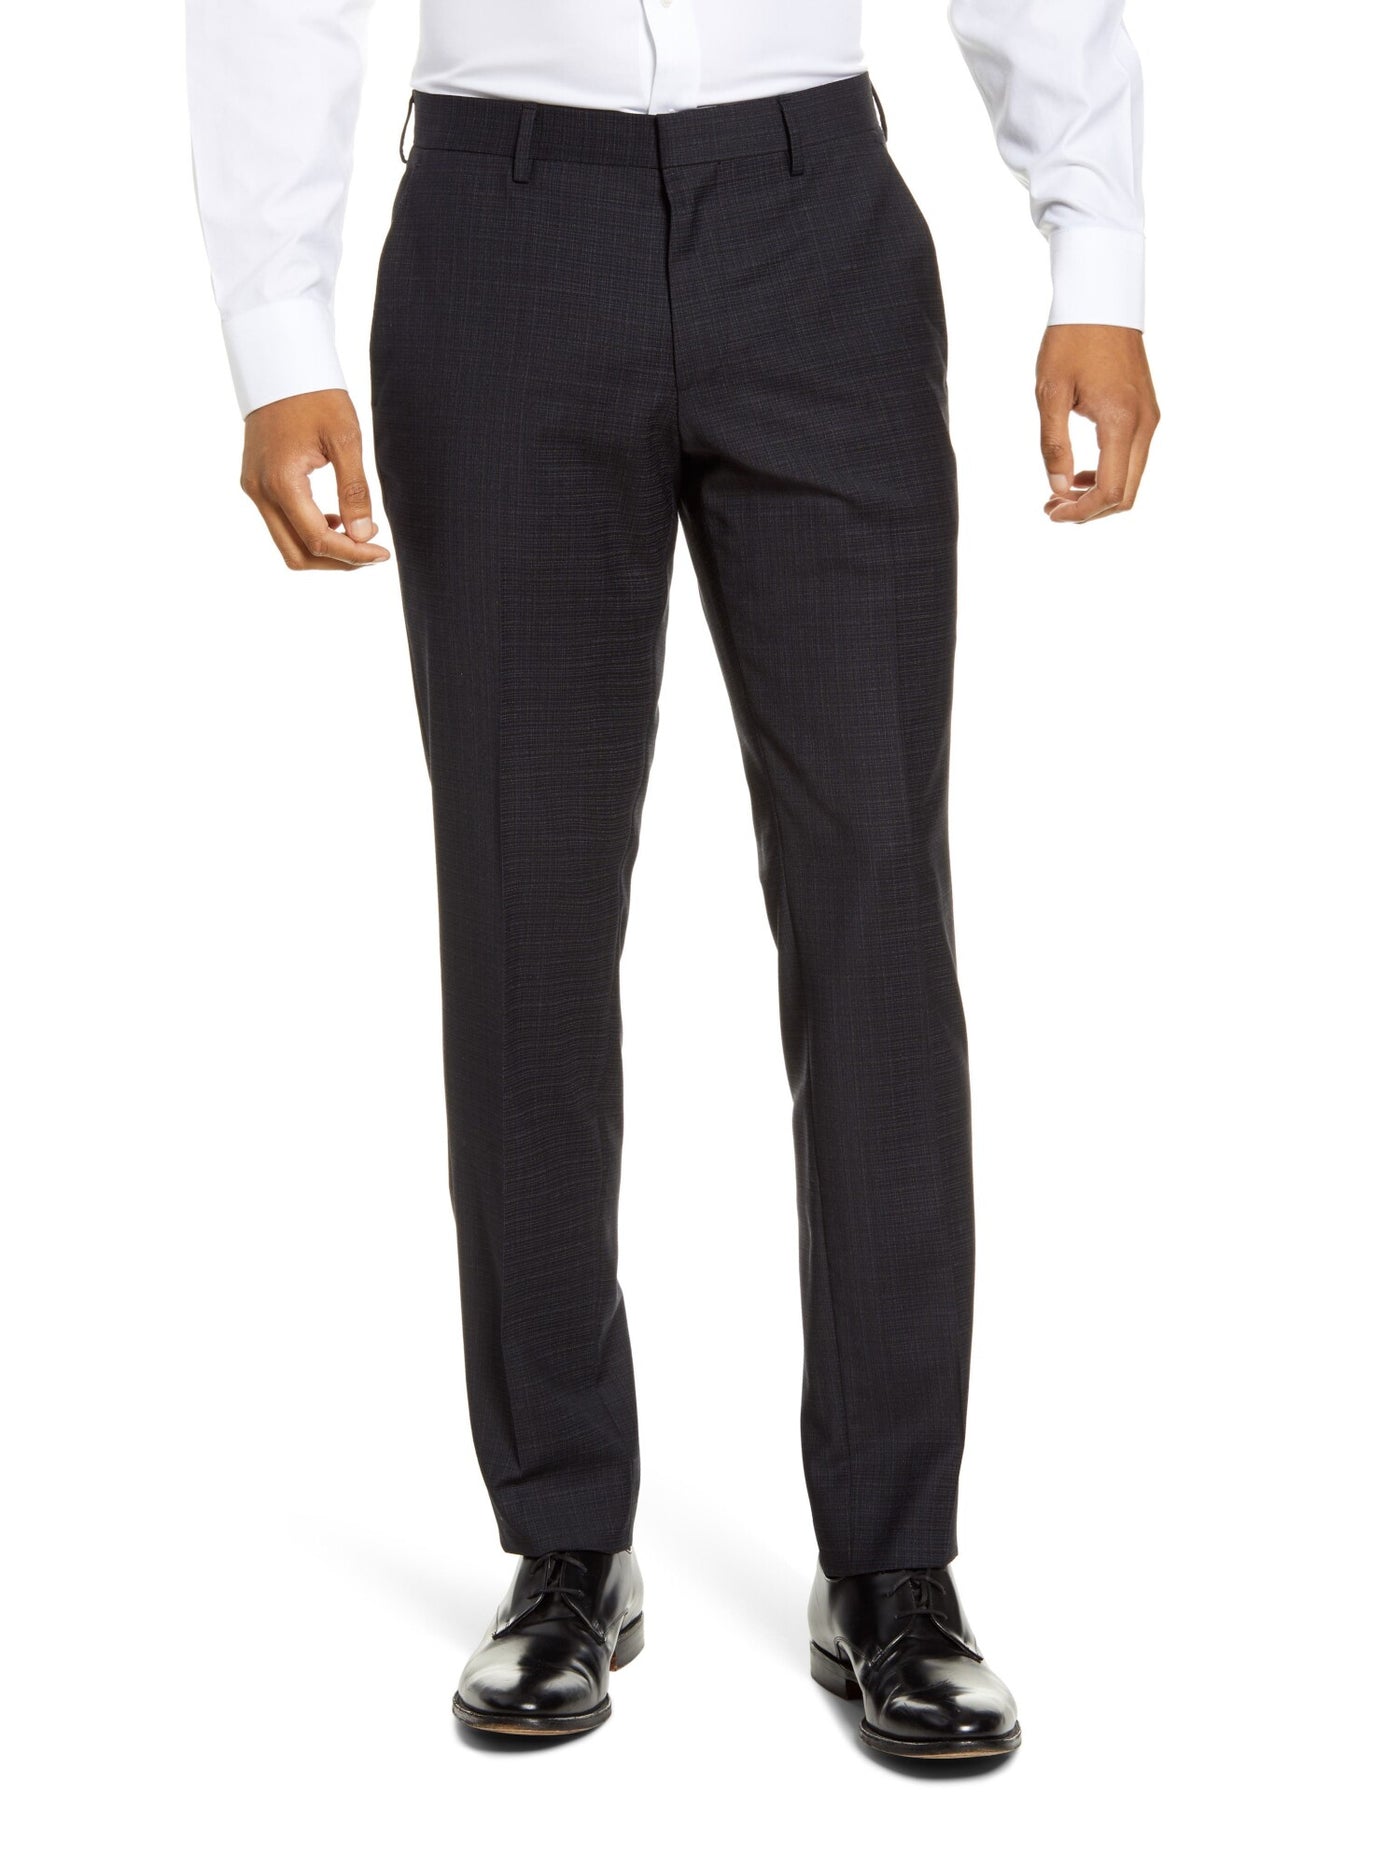 HUGO BOSS Mens Genius Hugo Black Label Navy Flat Front, Tapered, Plaid Slim Fit Stretch Suit Separate Pants 40R